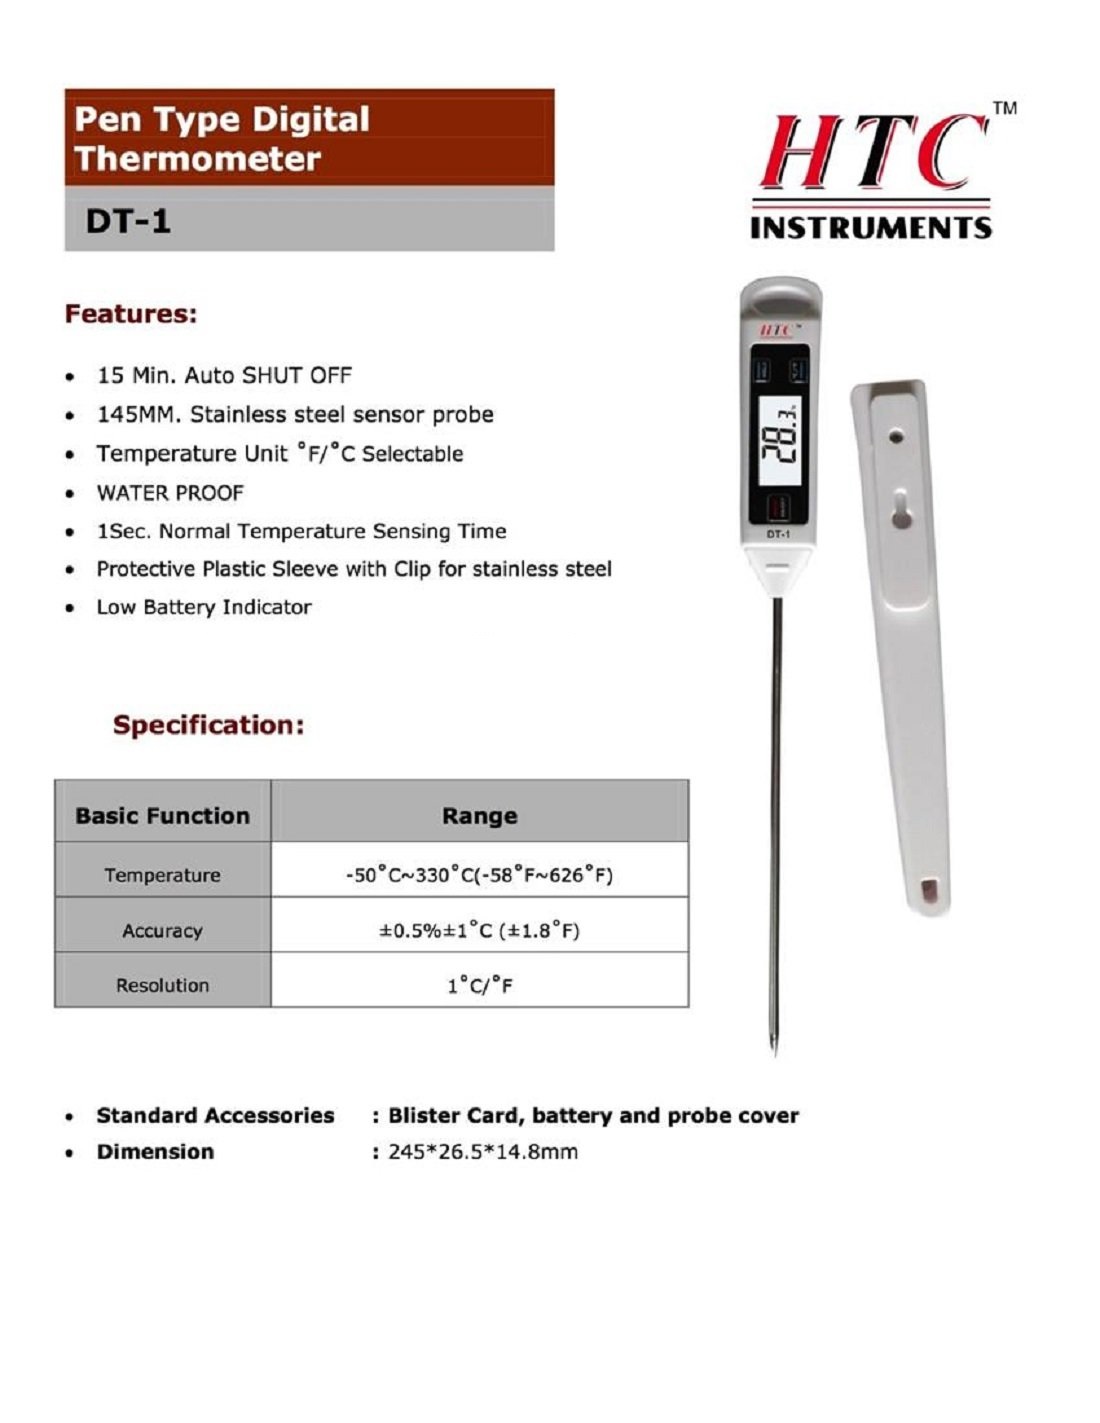 HTC DT-1 Pen Type Waterproof Digital Thermometer